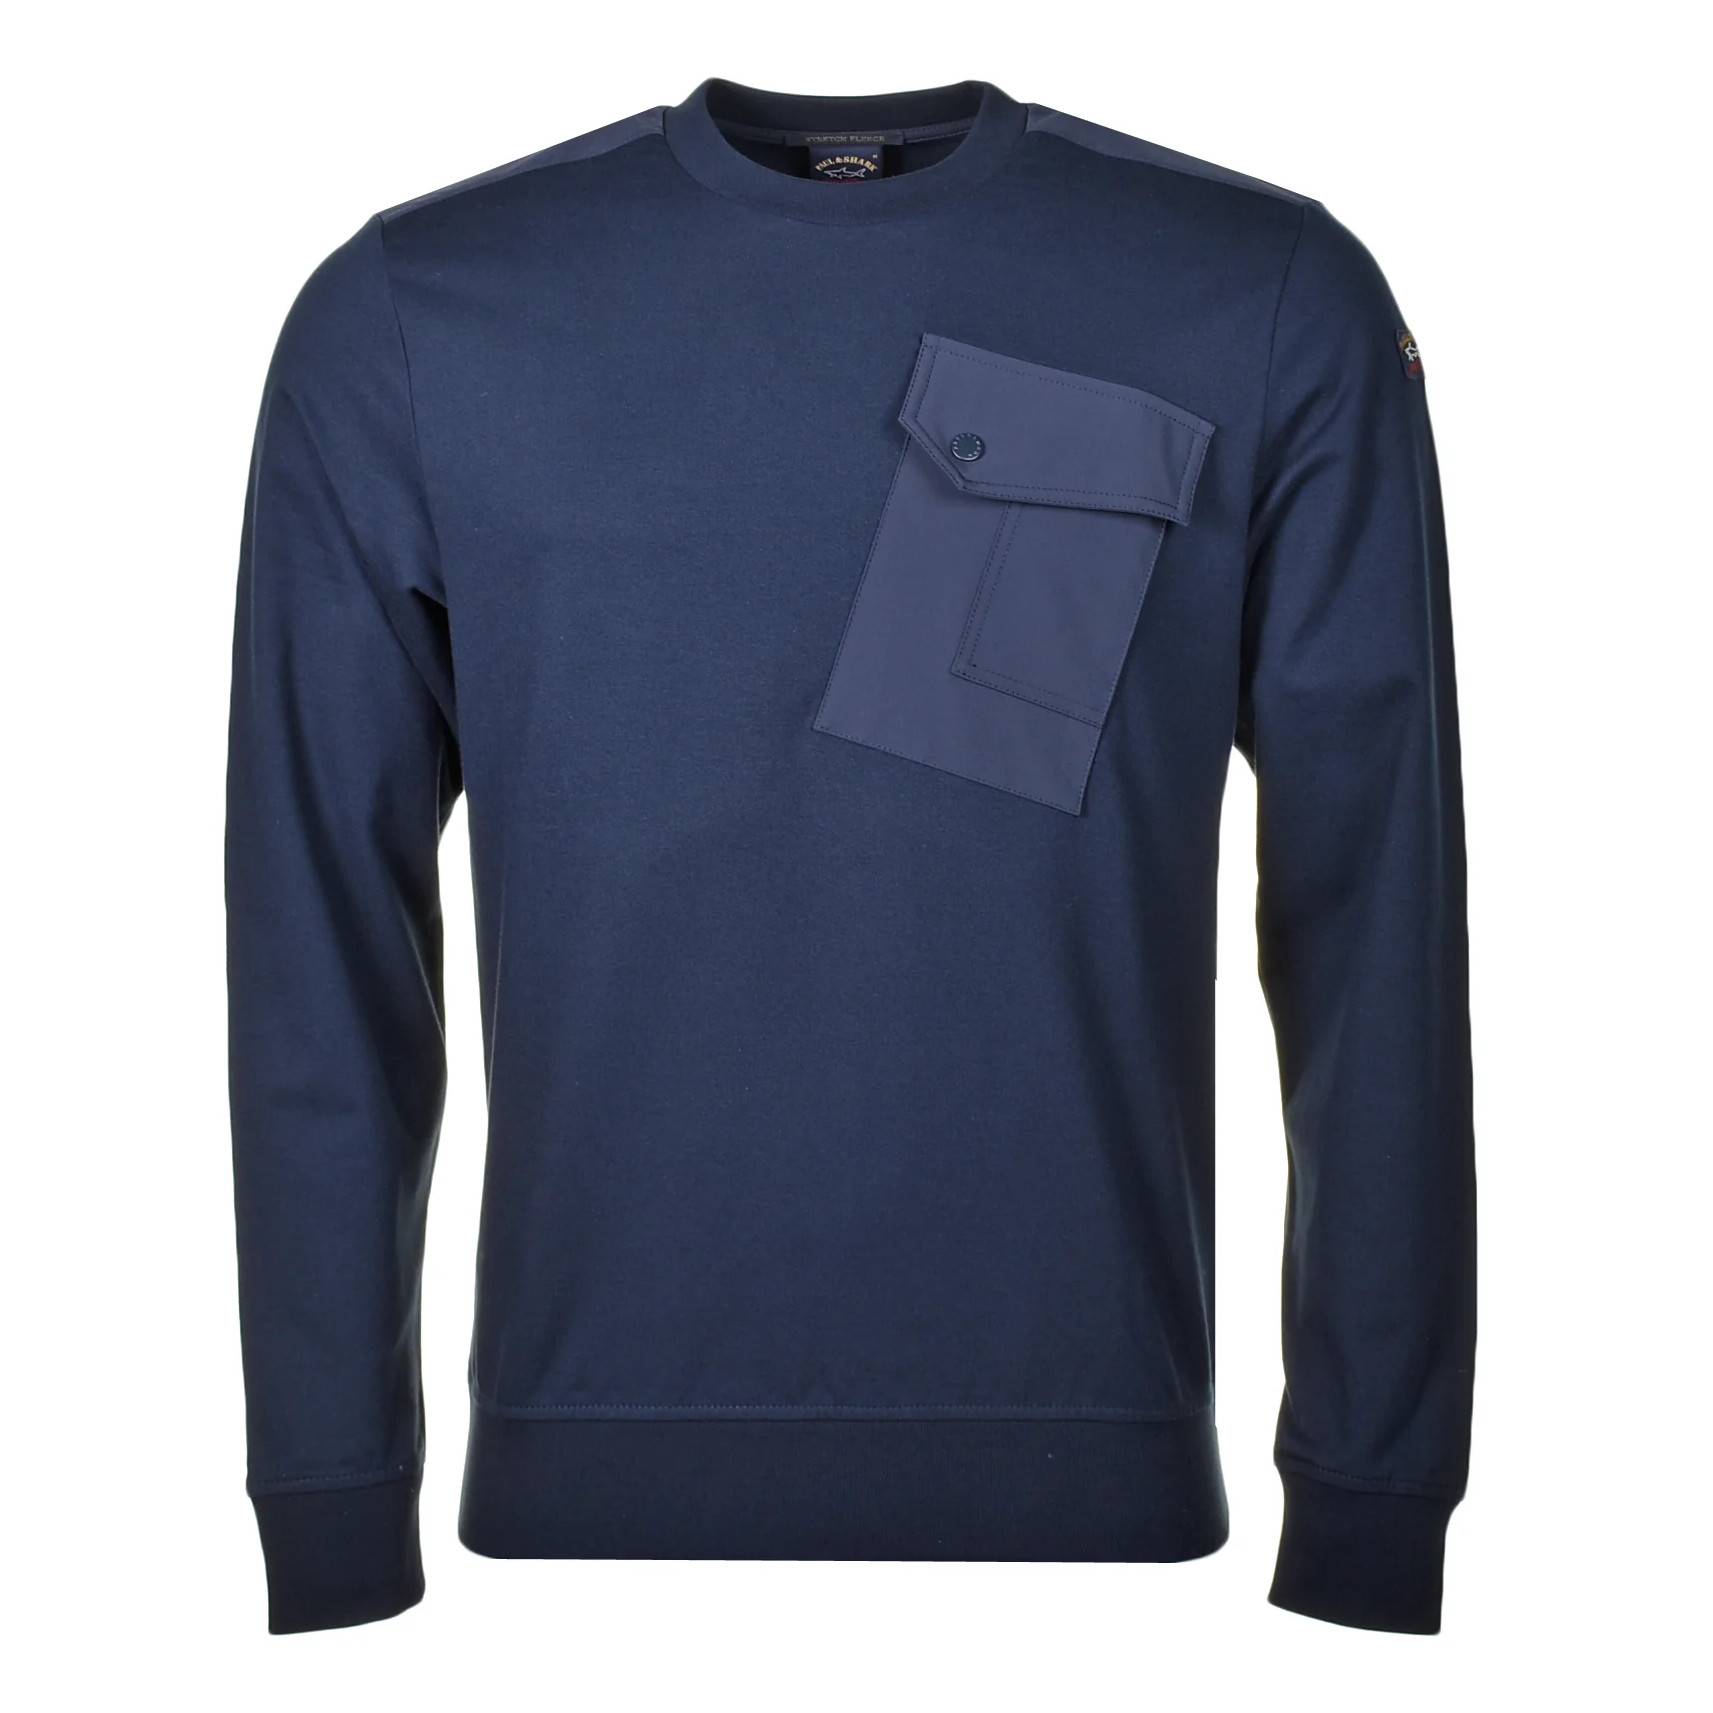 Paul & Shark Tech Pocket Sweatshirt Navy